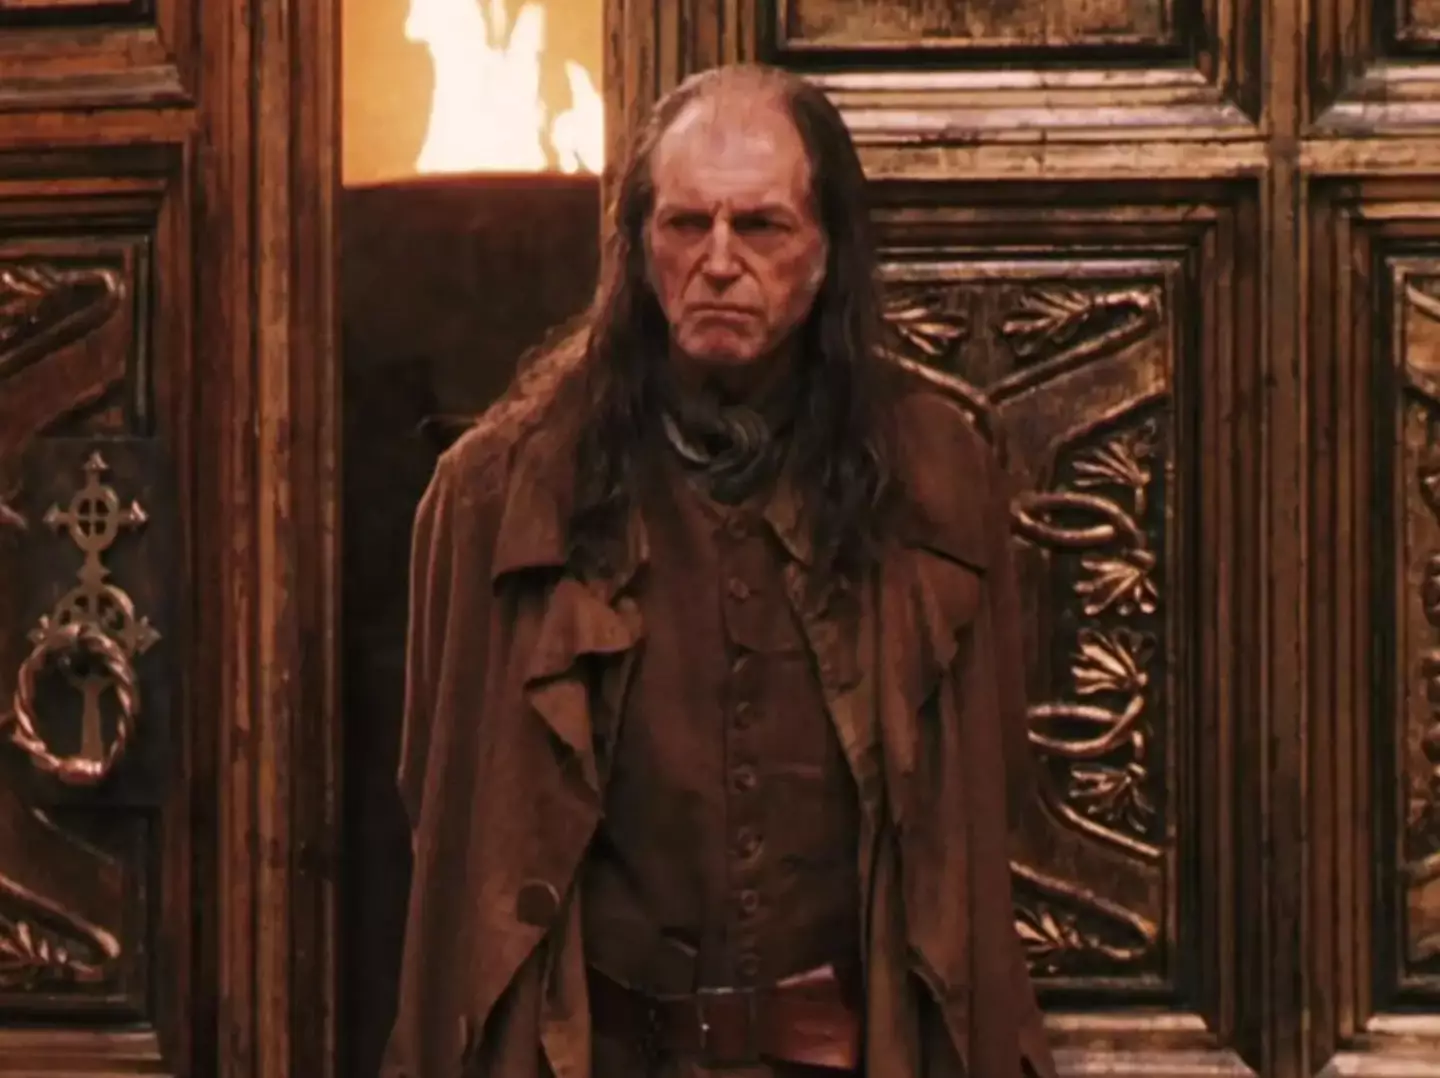 Filch is not popular at Hogwarts (